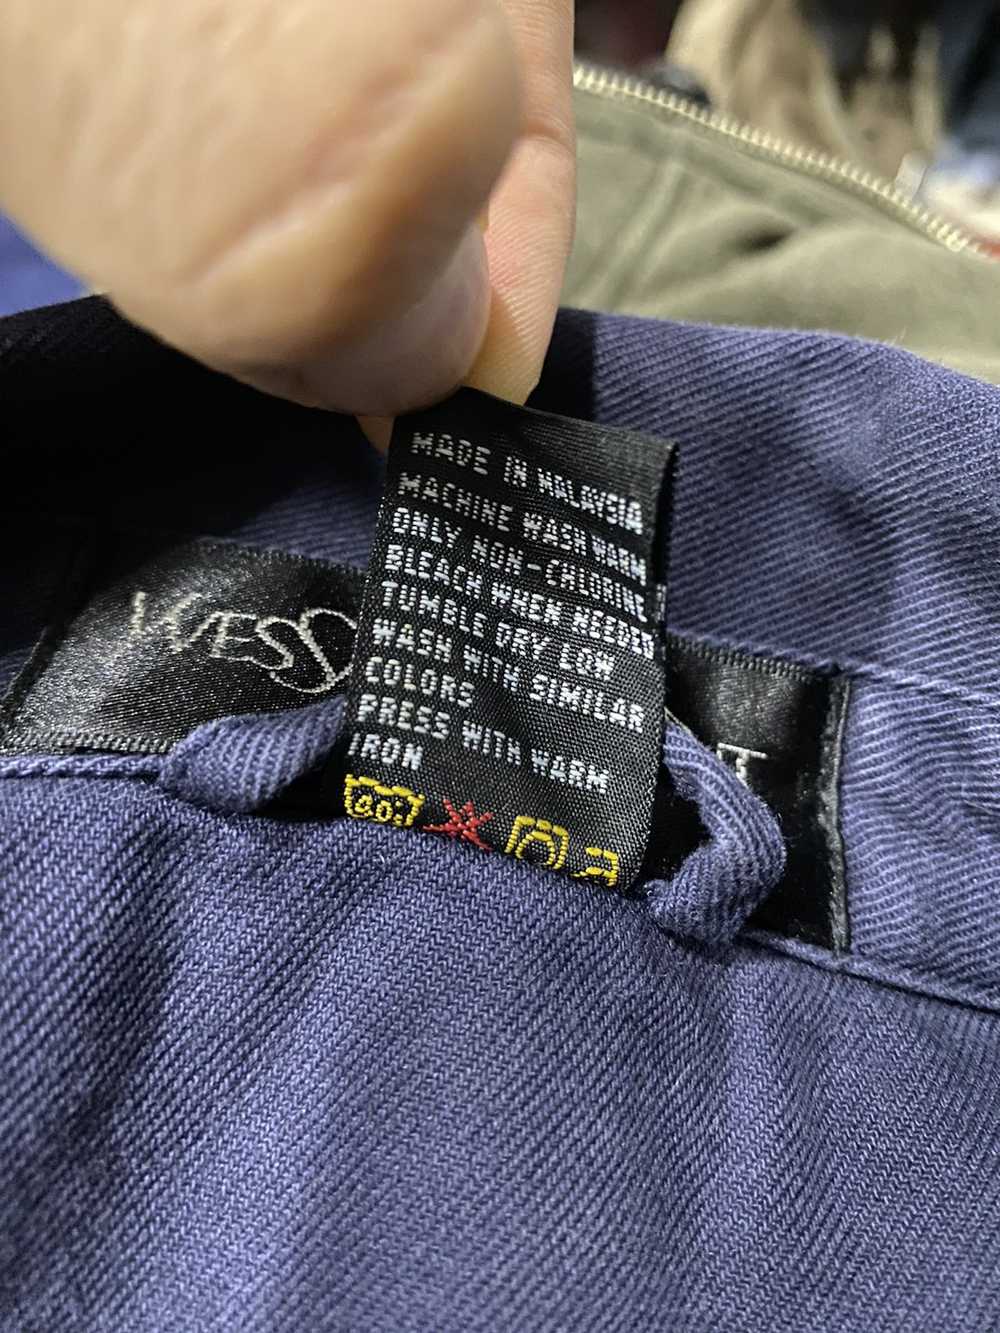 Vintage × Yves Saint Laurent 90s YSL Jacket Cotto… - image 5